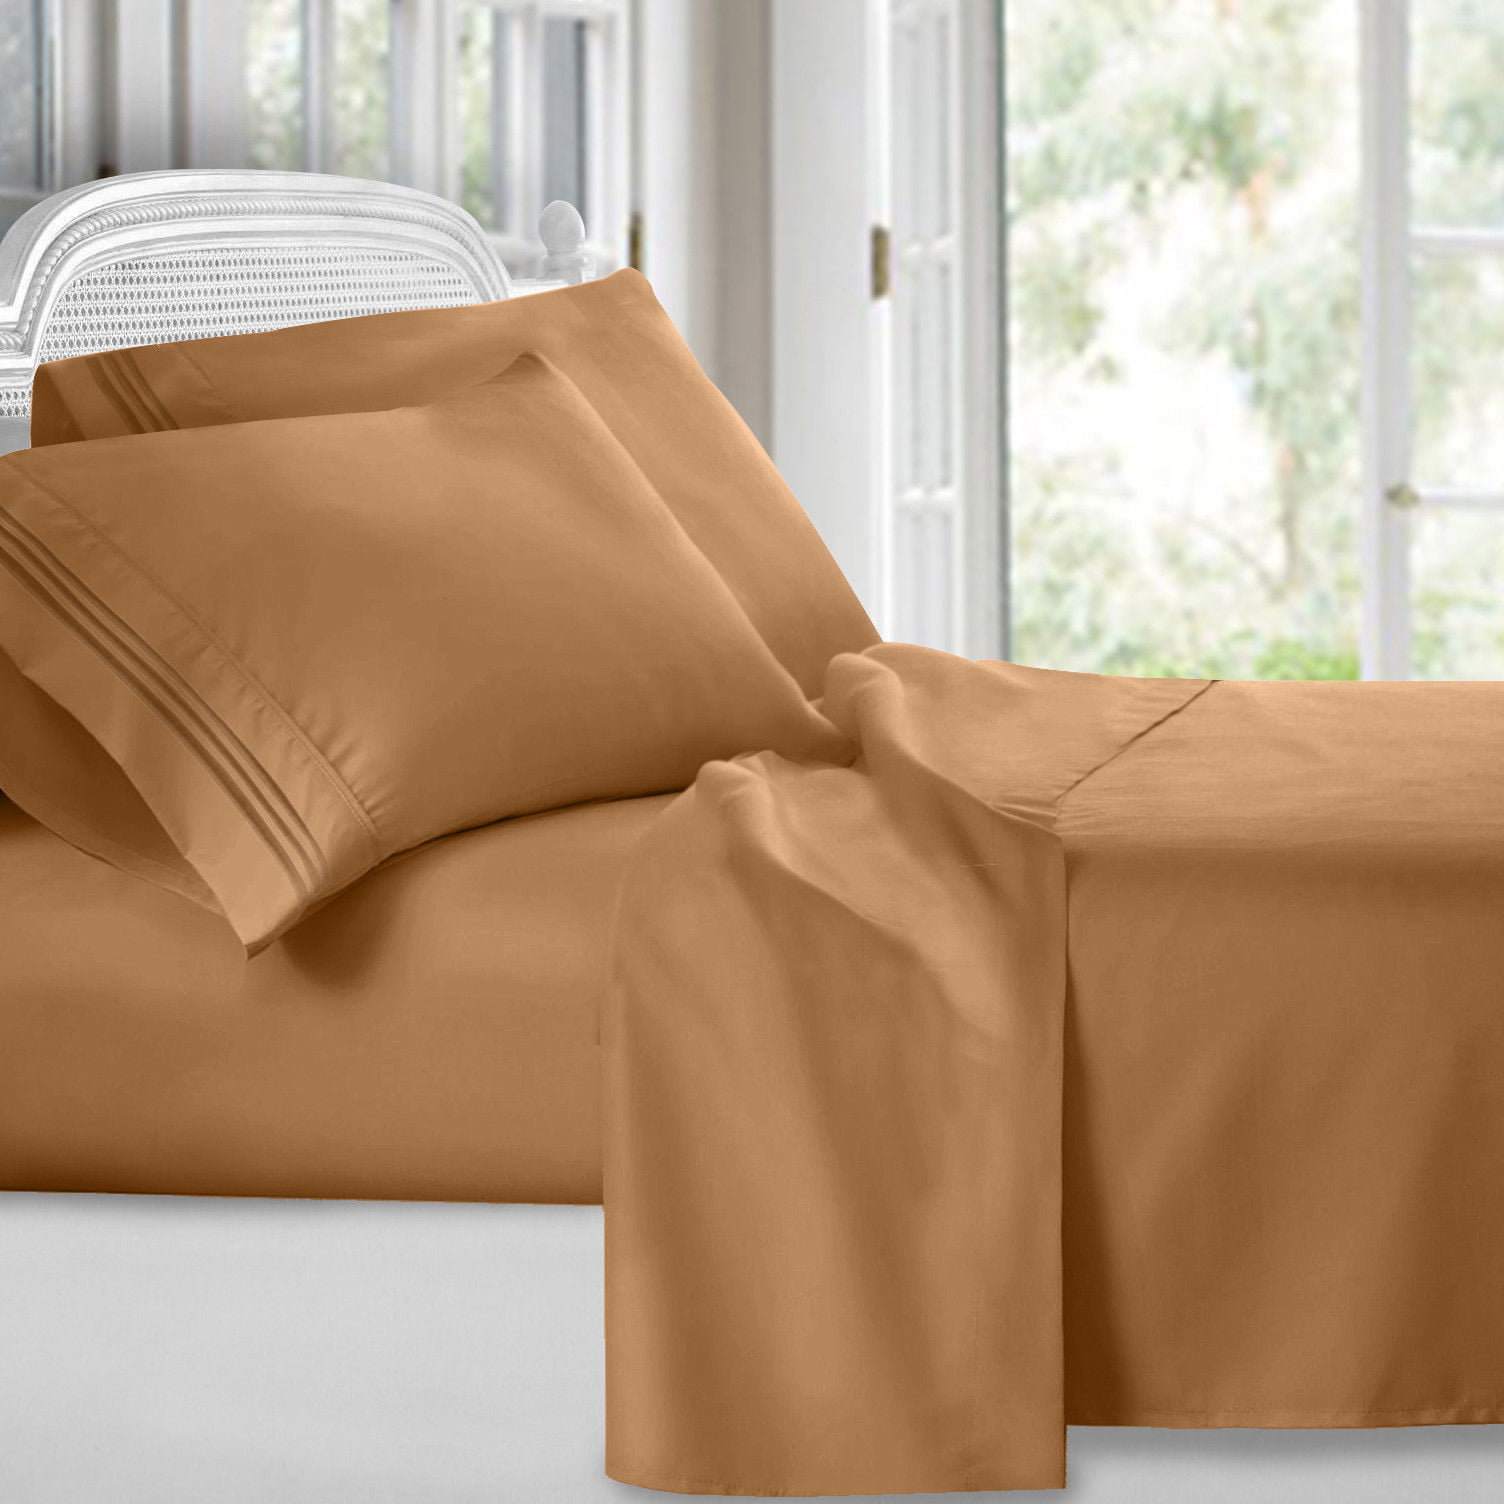 Egyptian Comfort Soft Hotel Luxury 4 Pcs Bed Sheet Set Wholesale Bulk Lot of 10 